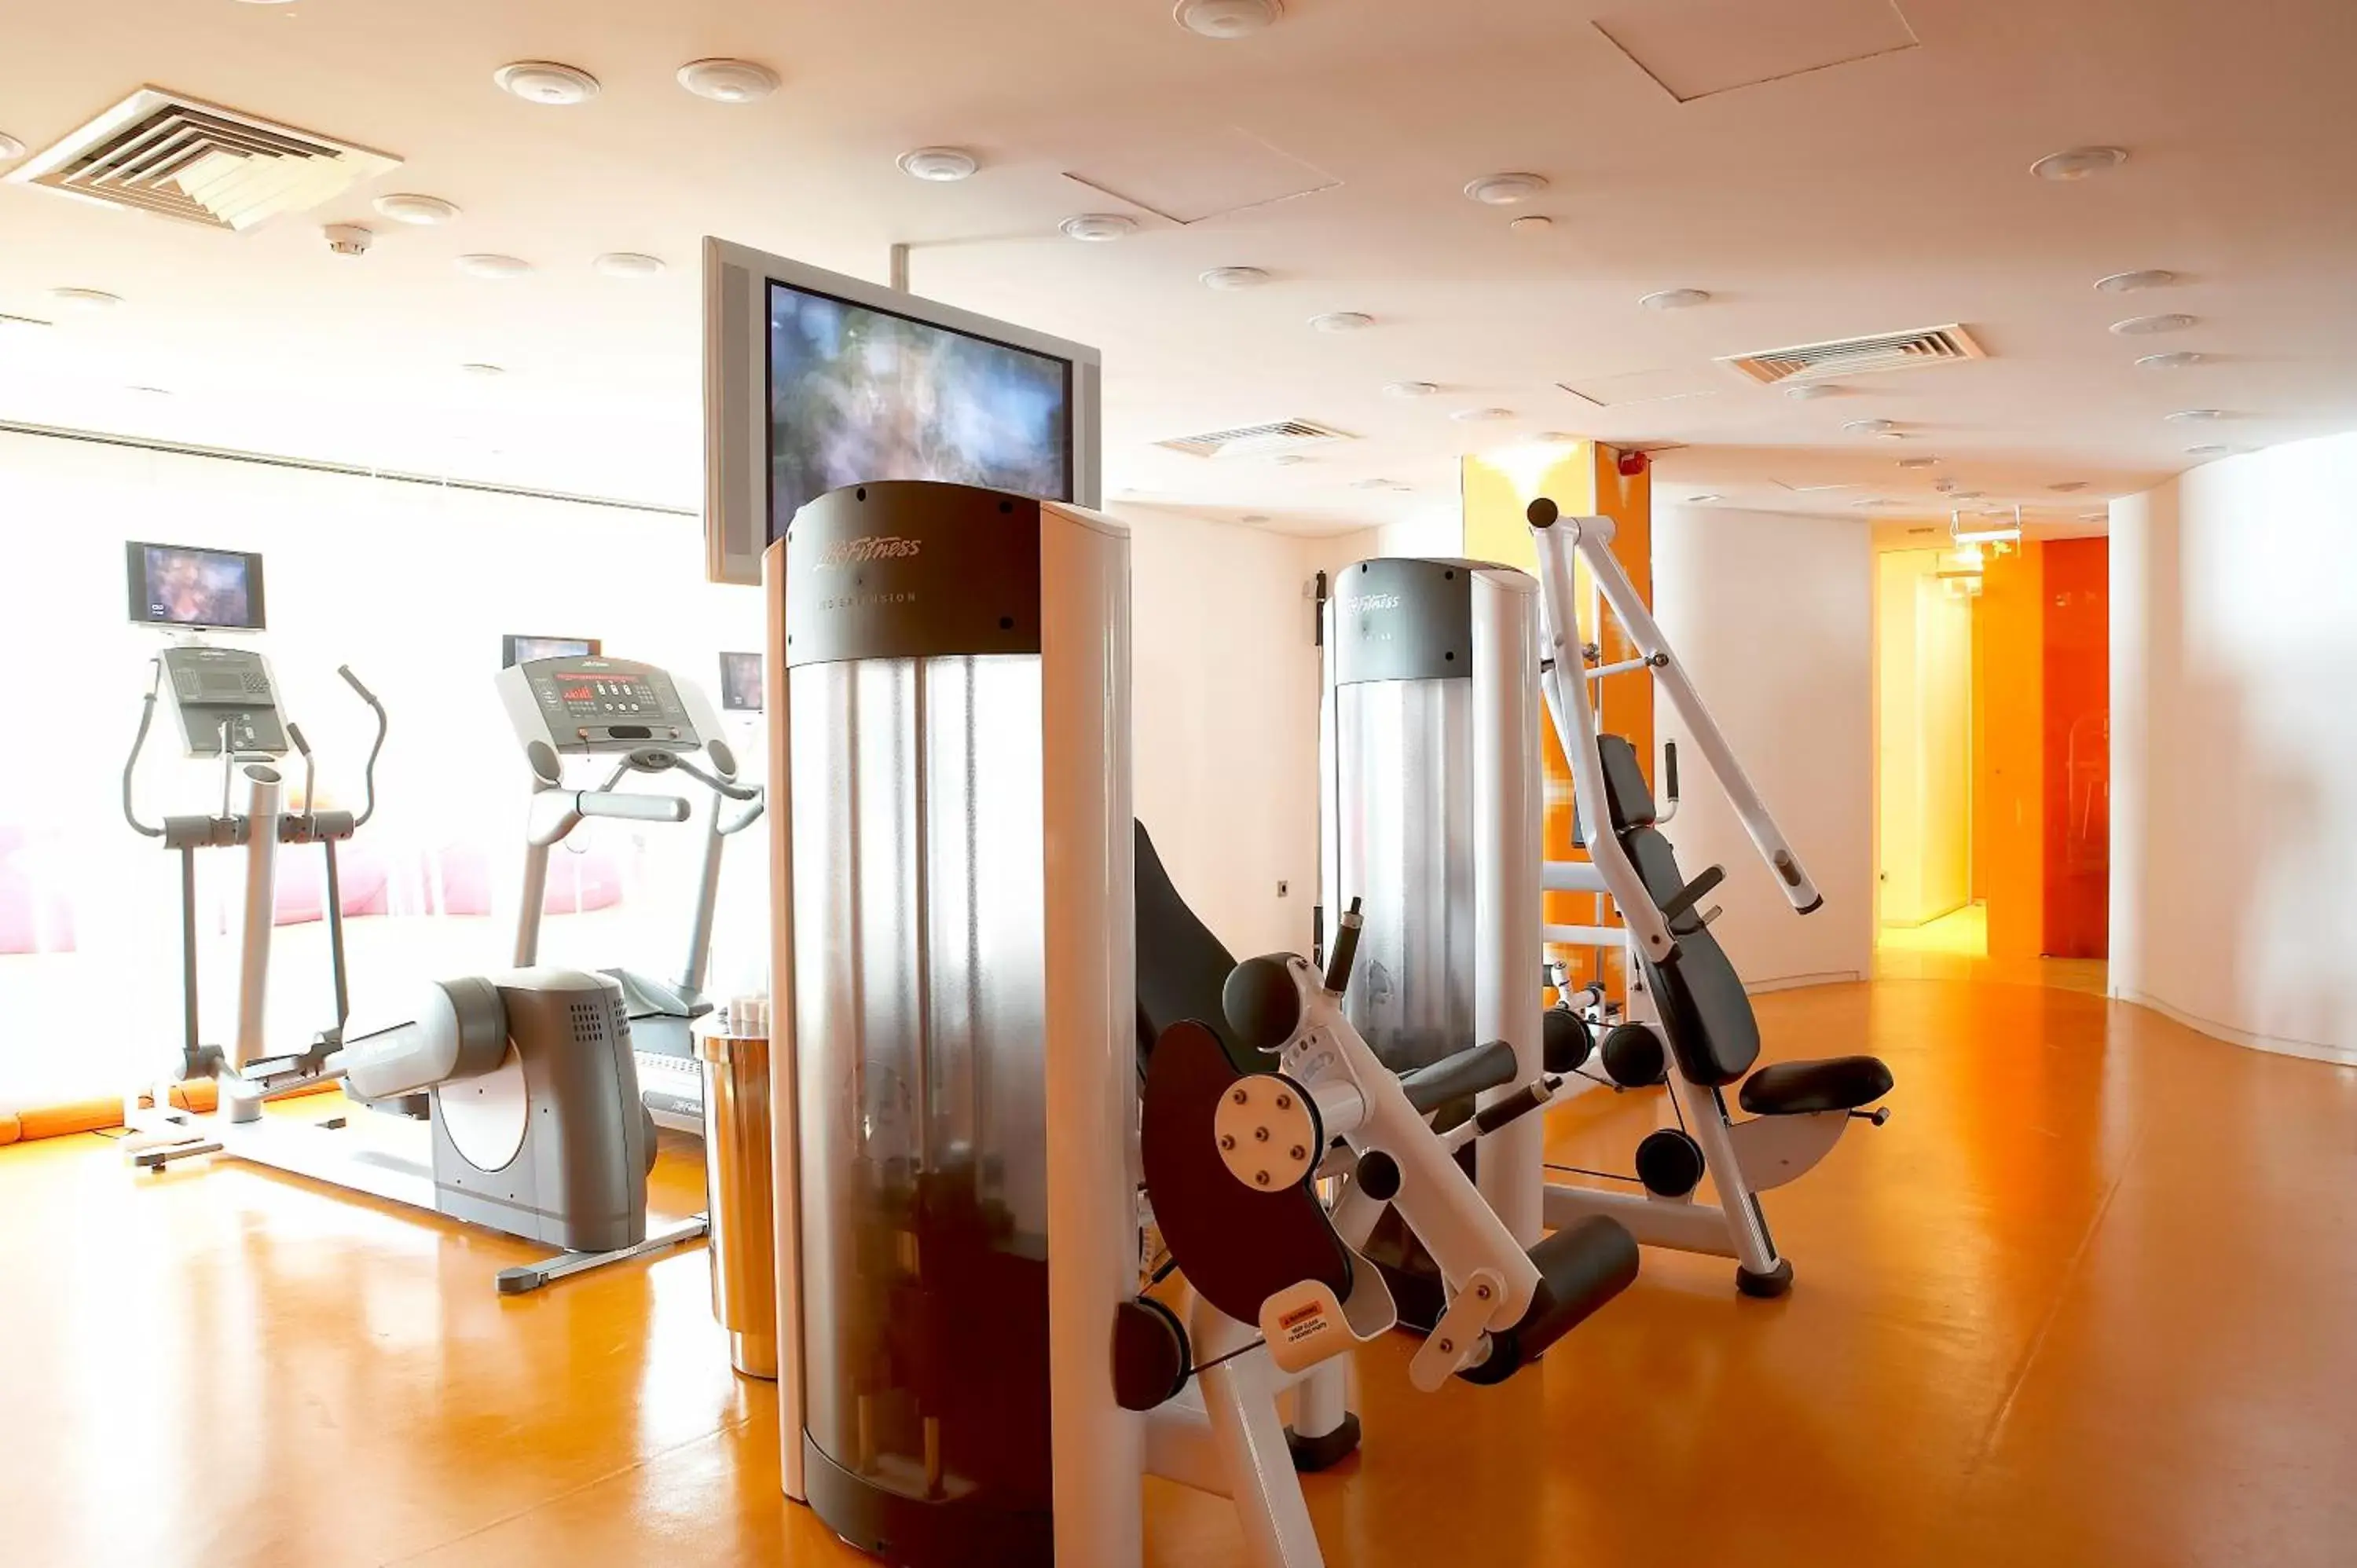 Fitness centre/facilities, Fitness Center/Facilities in Semiramis